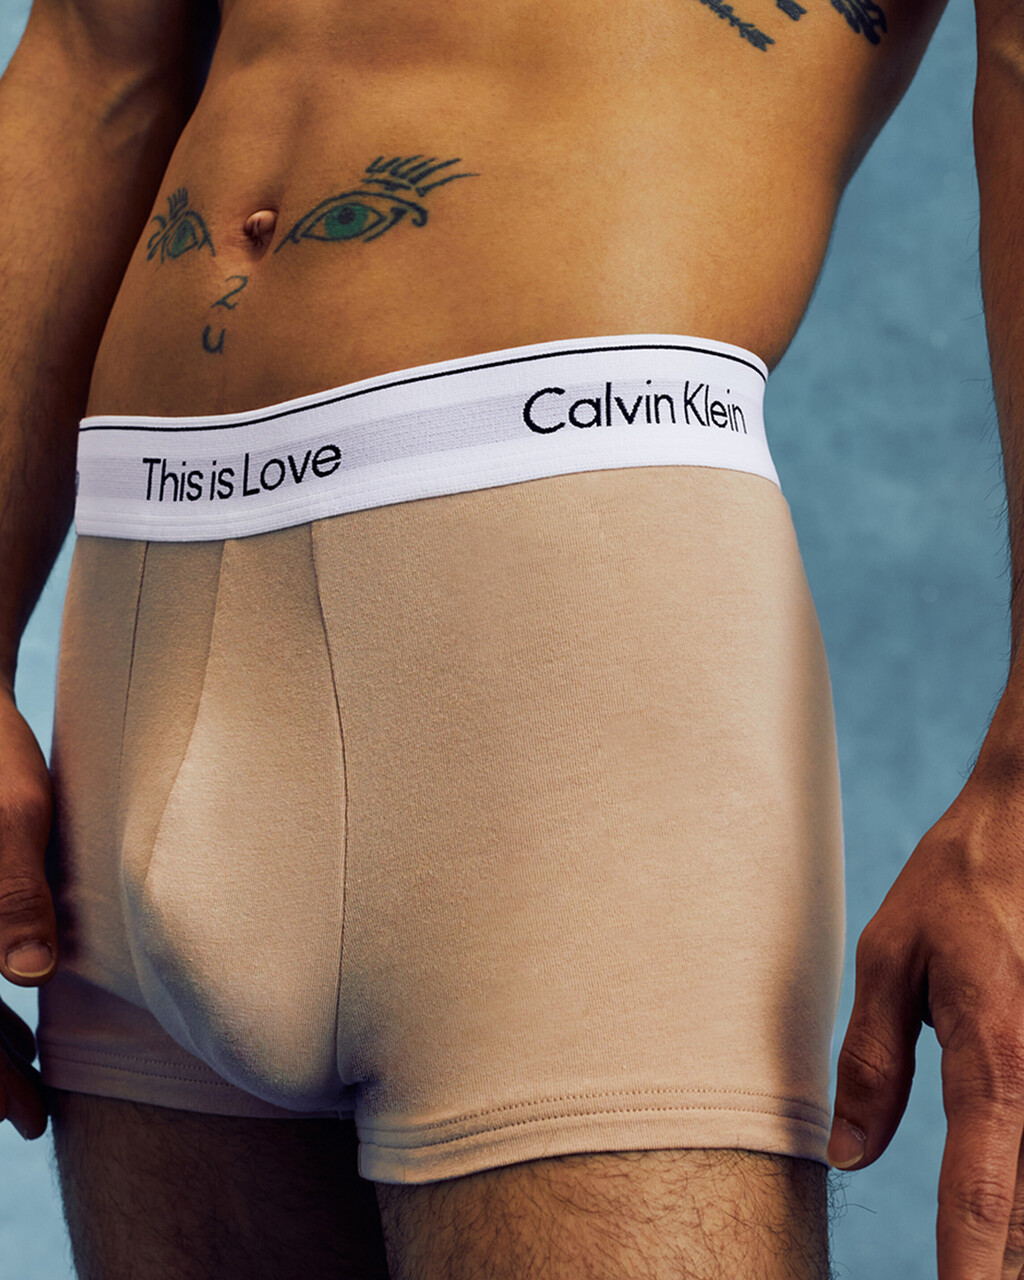 MODERN COTTON THIS IS LOVE 四角褲, Travertine, hi-res